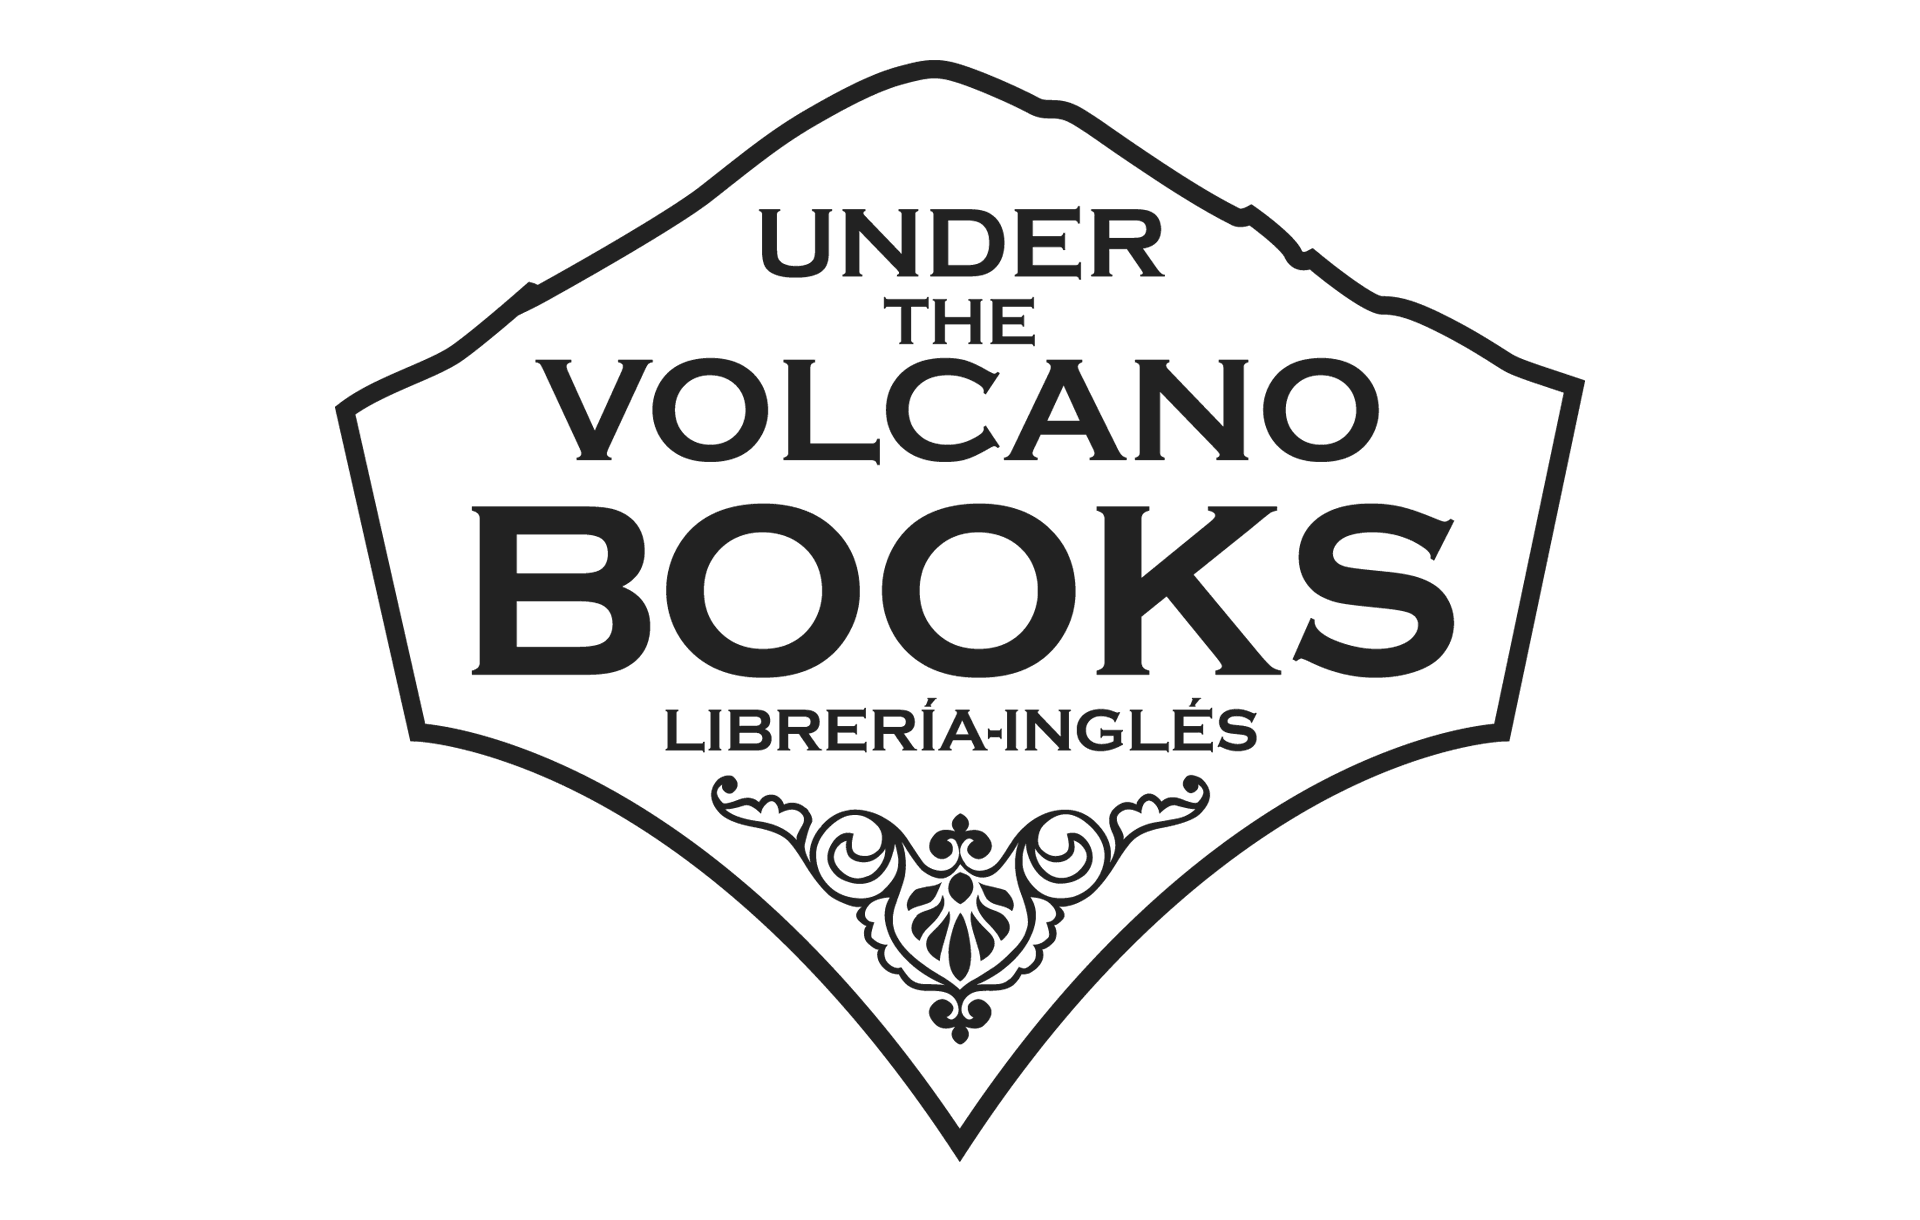 Under the Volcano Books